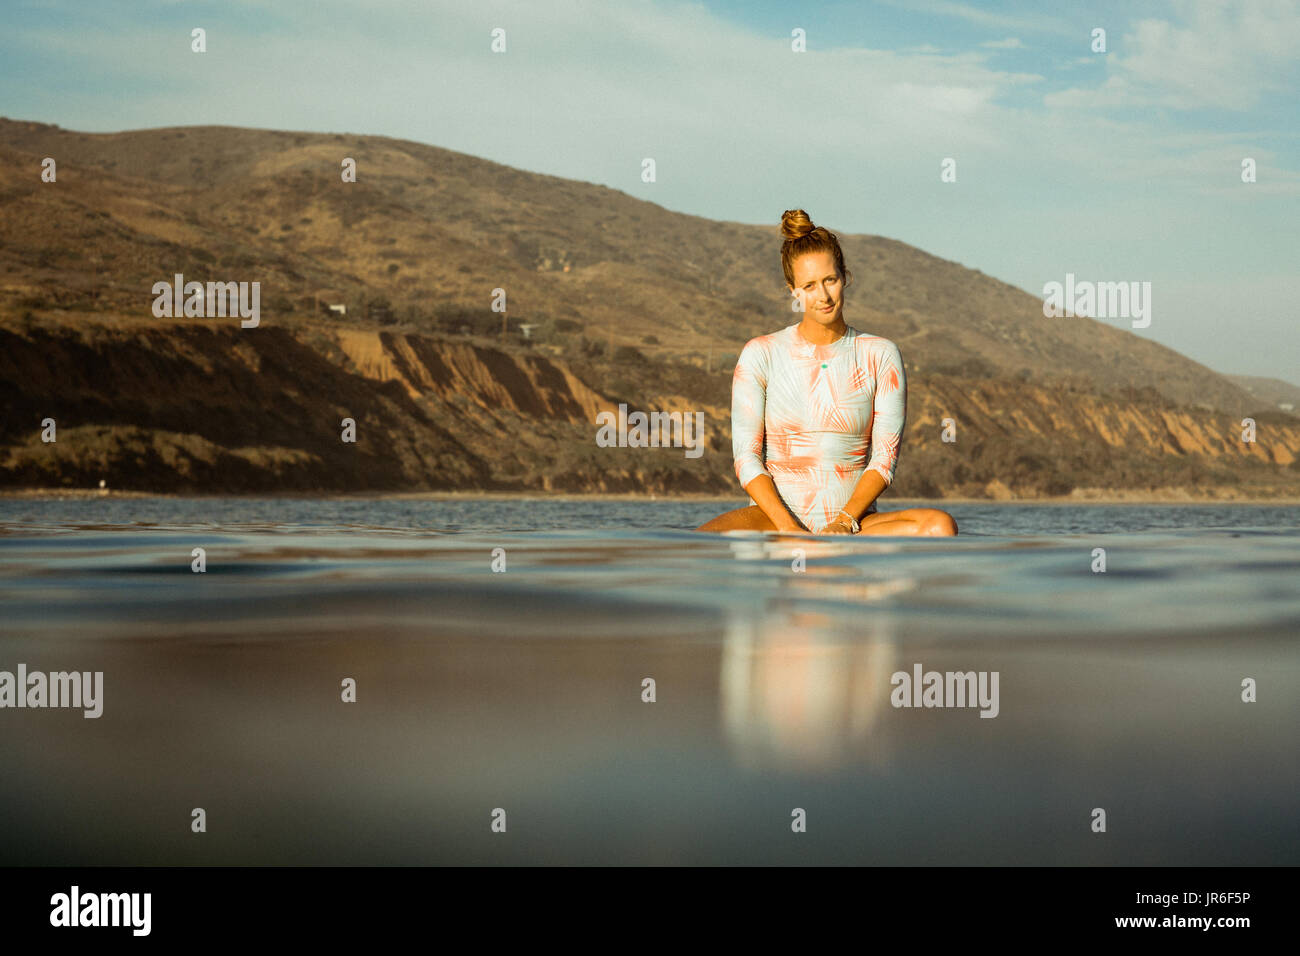 Frau sitzt auf Surfbrett im Ozean, California, Amerika, USA Stockfoto